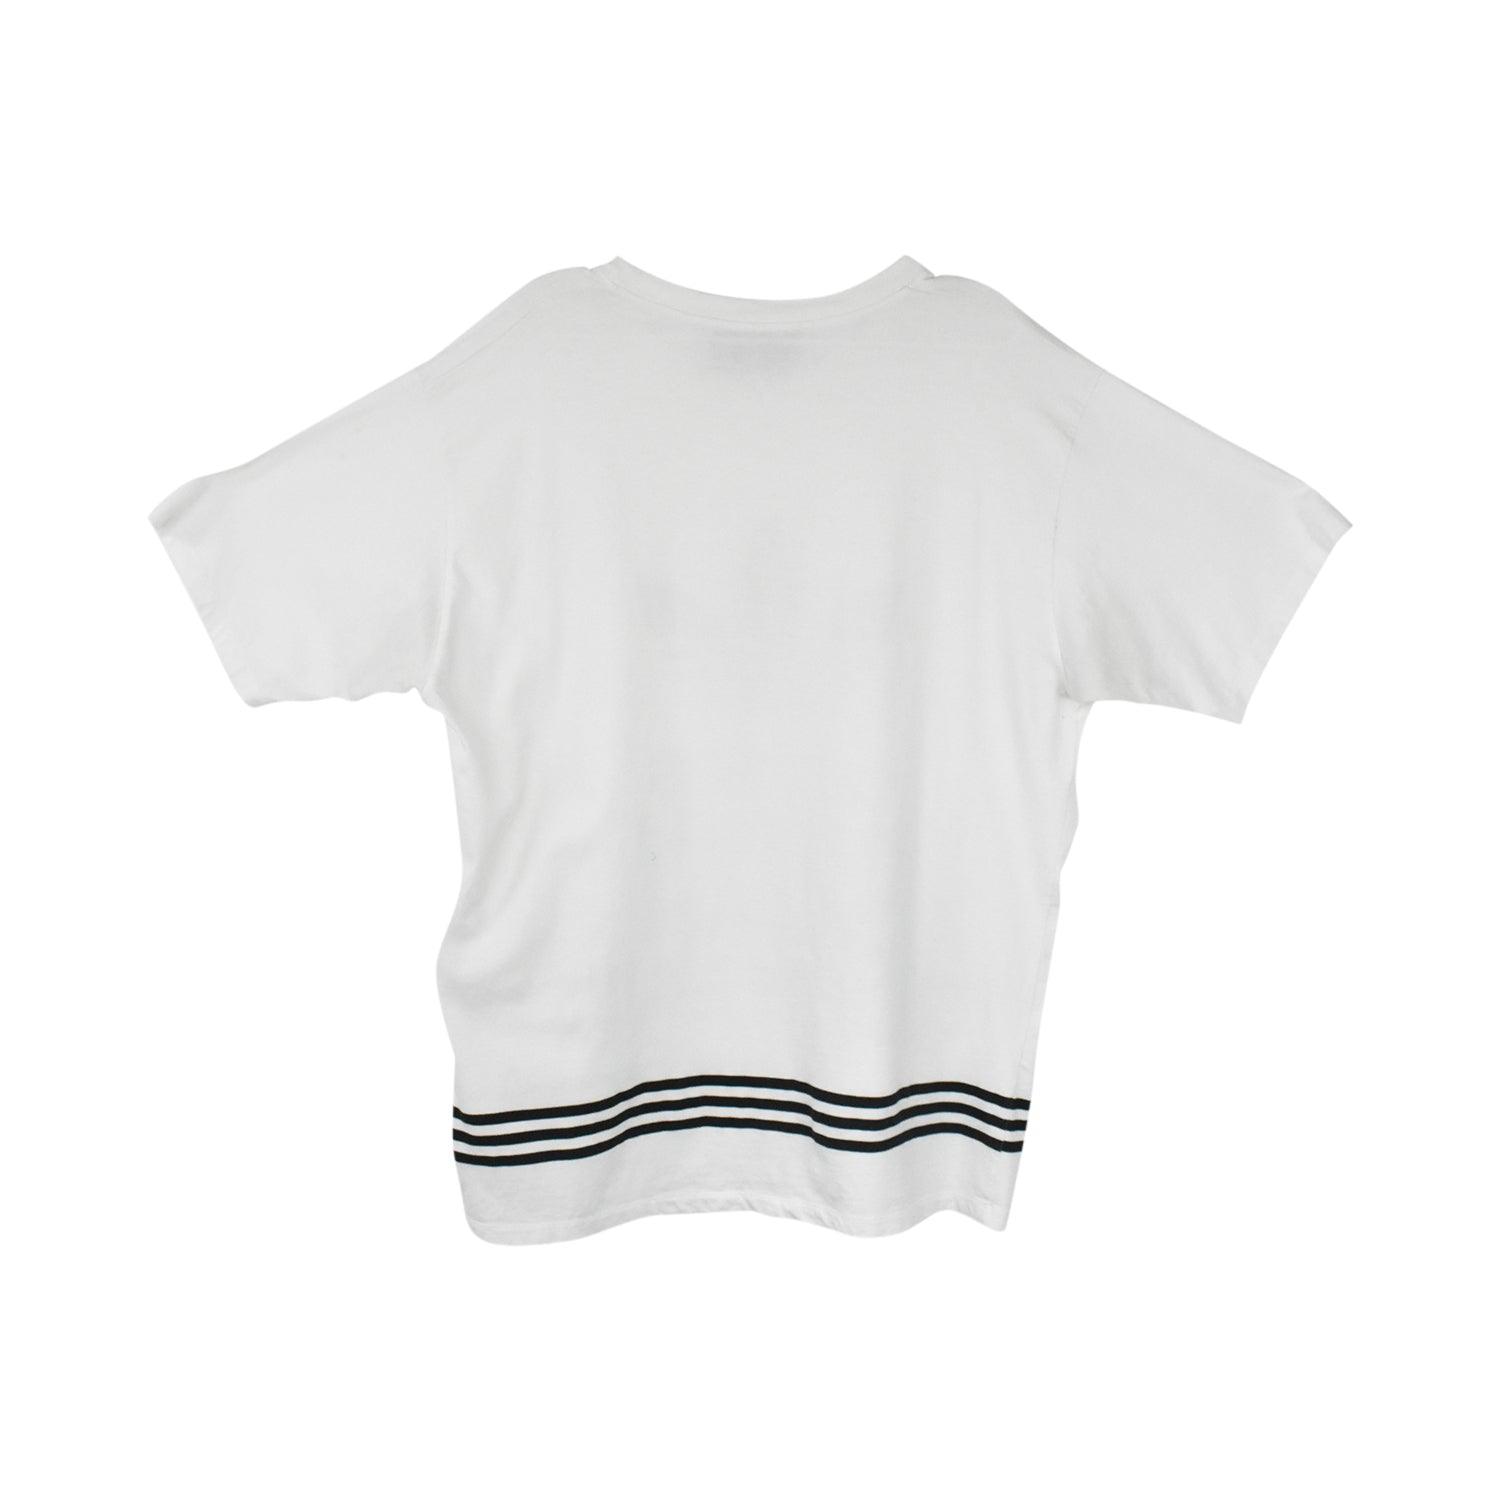 Gucci x Adidas T-Shirt - Men's XL - Fashionably Yours